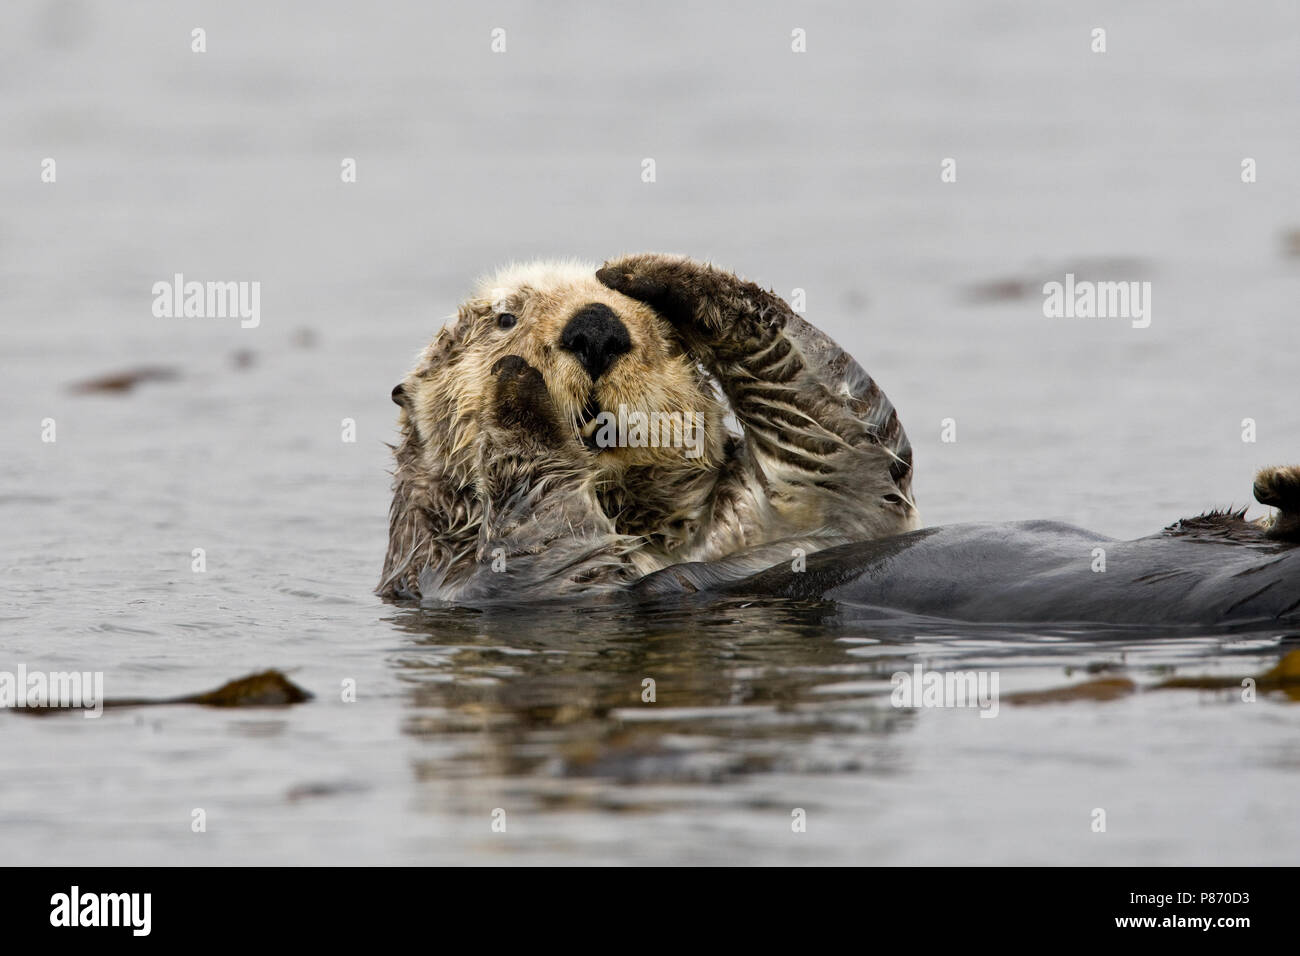 Zeeotterdrijvend in Seetang Californie USA, Sea Otter floating in Seetang Kalifornien USA Stockfoto